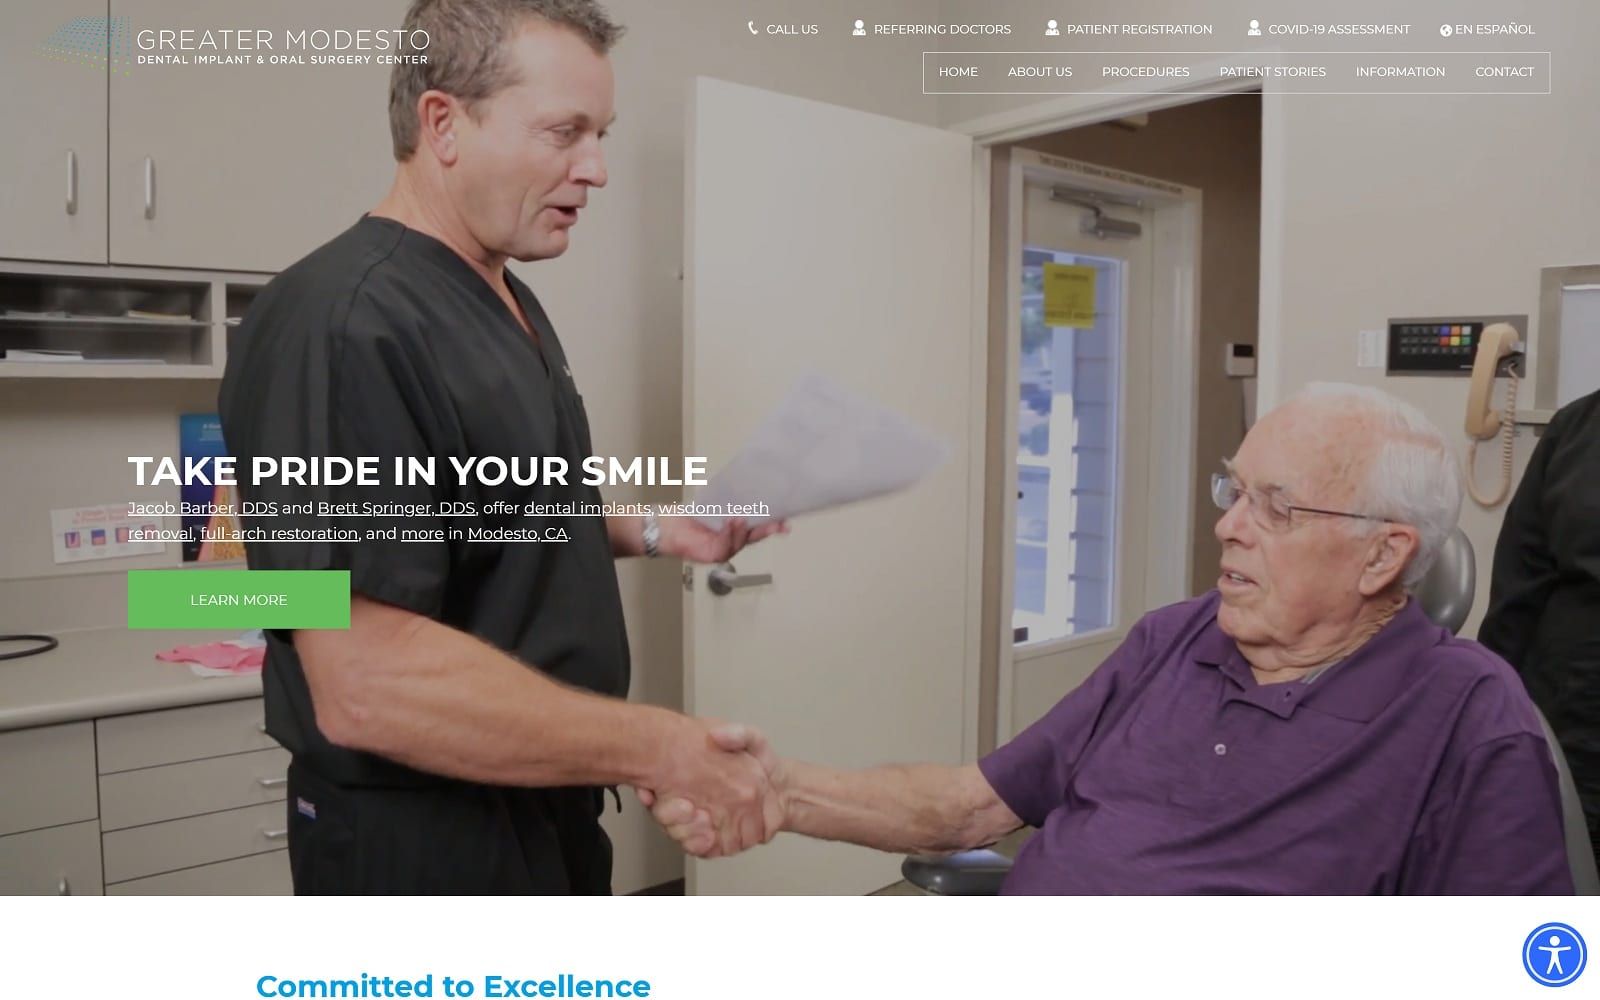 The screenshot of greater modesto dental implant & oral surgery center greatermodestooralsurgery. Com website